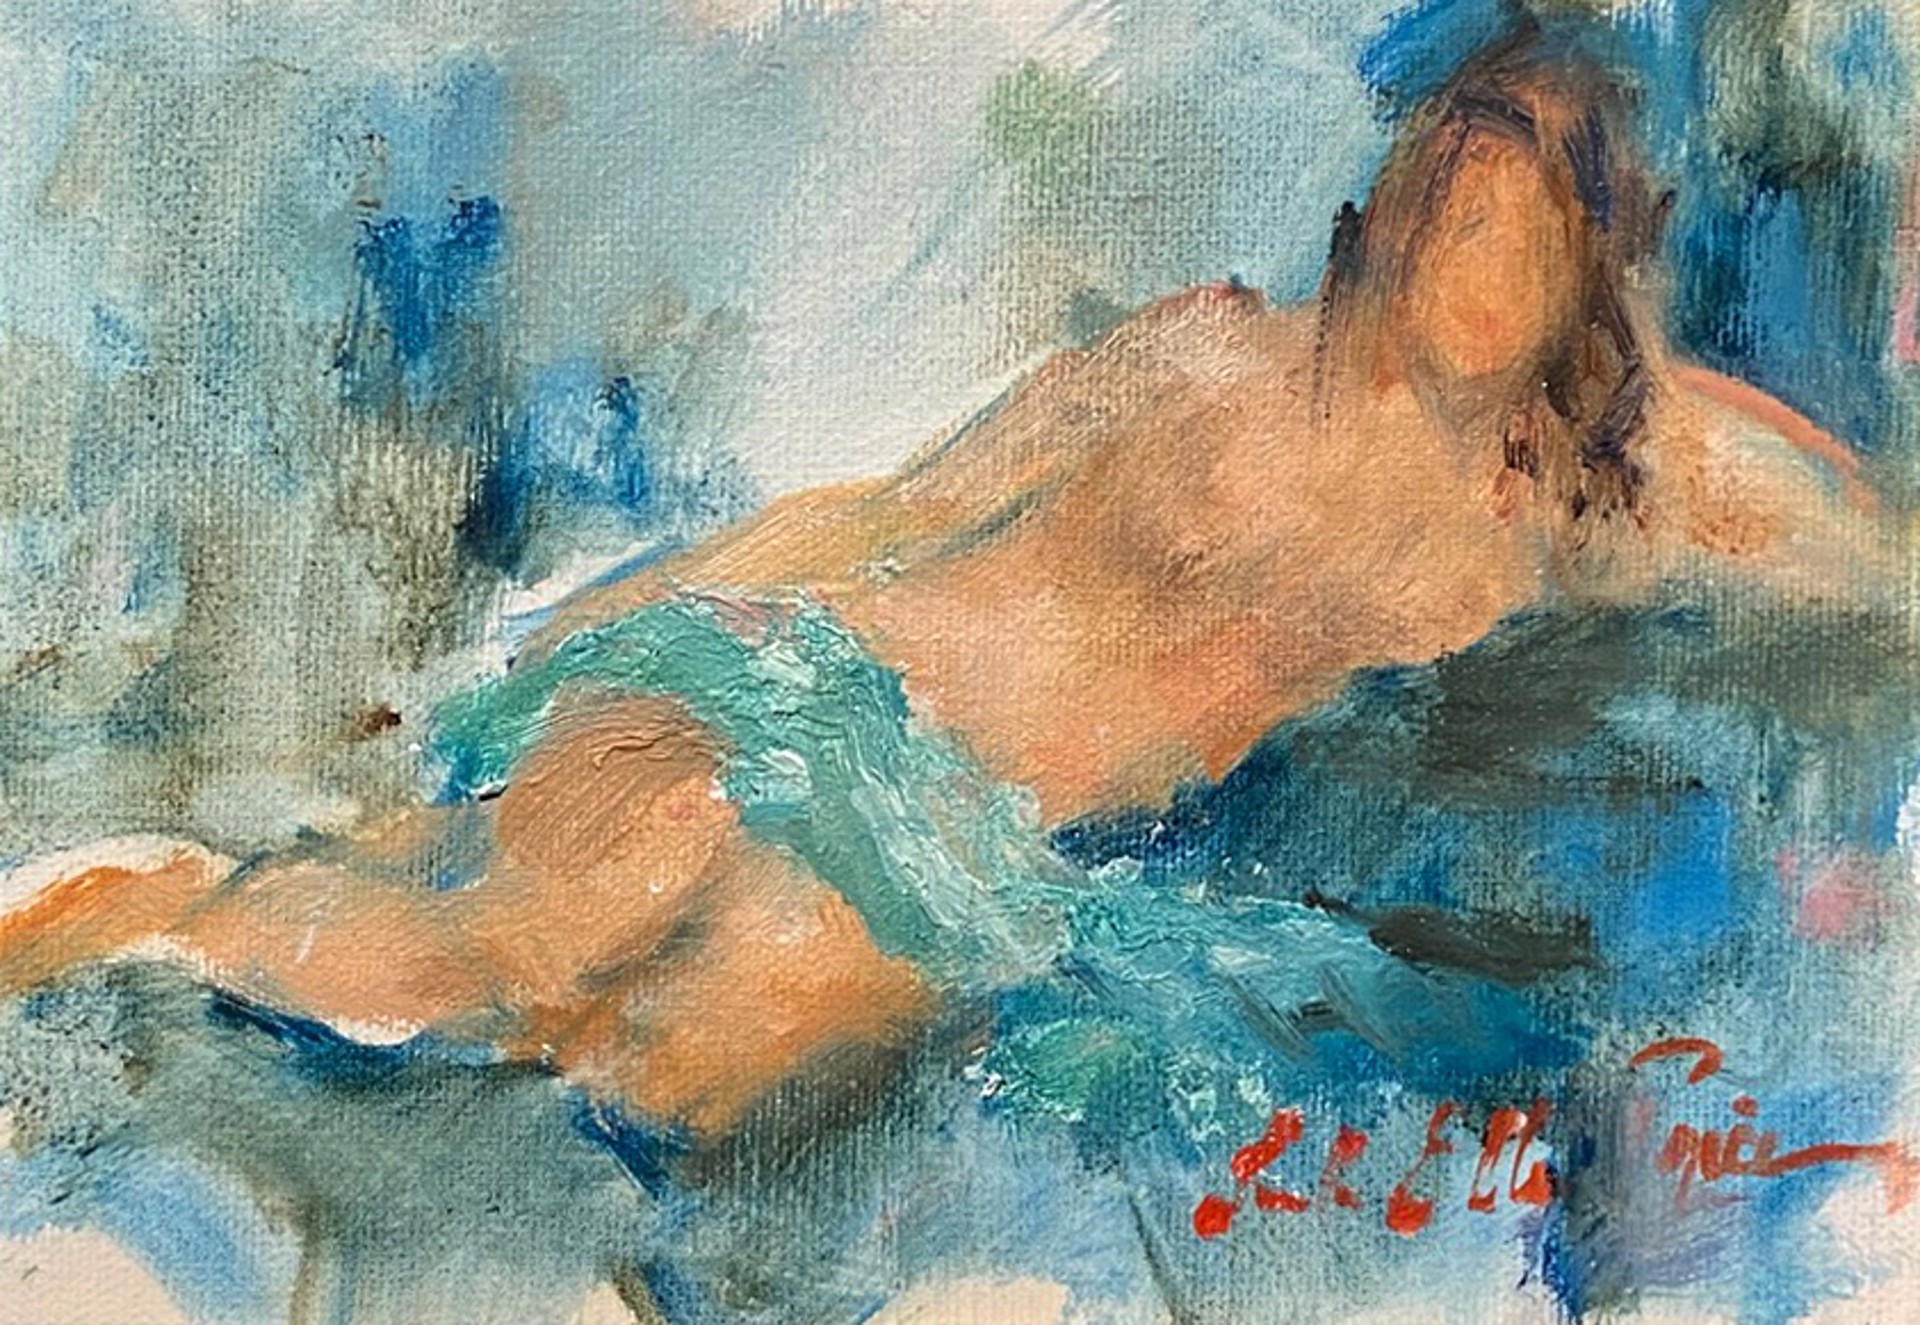 After the Bath by Linda Ellen Price